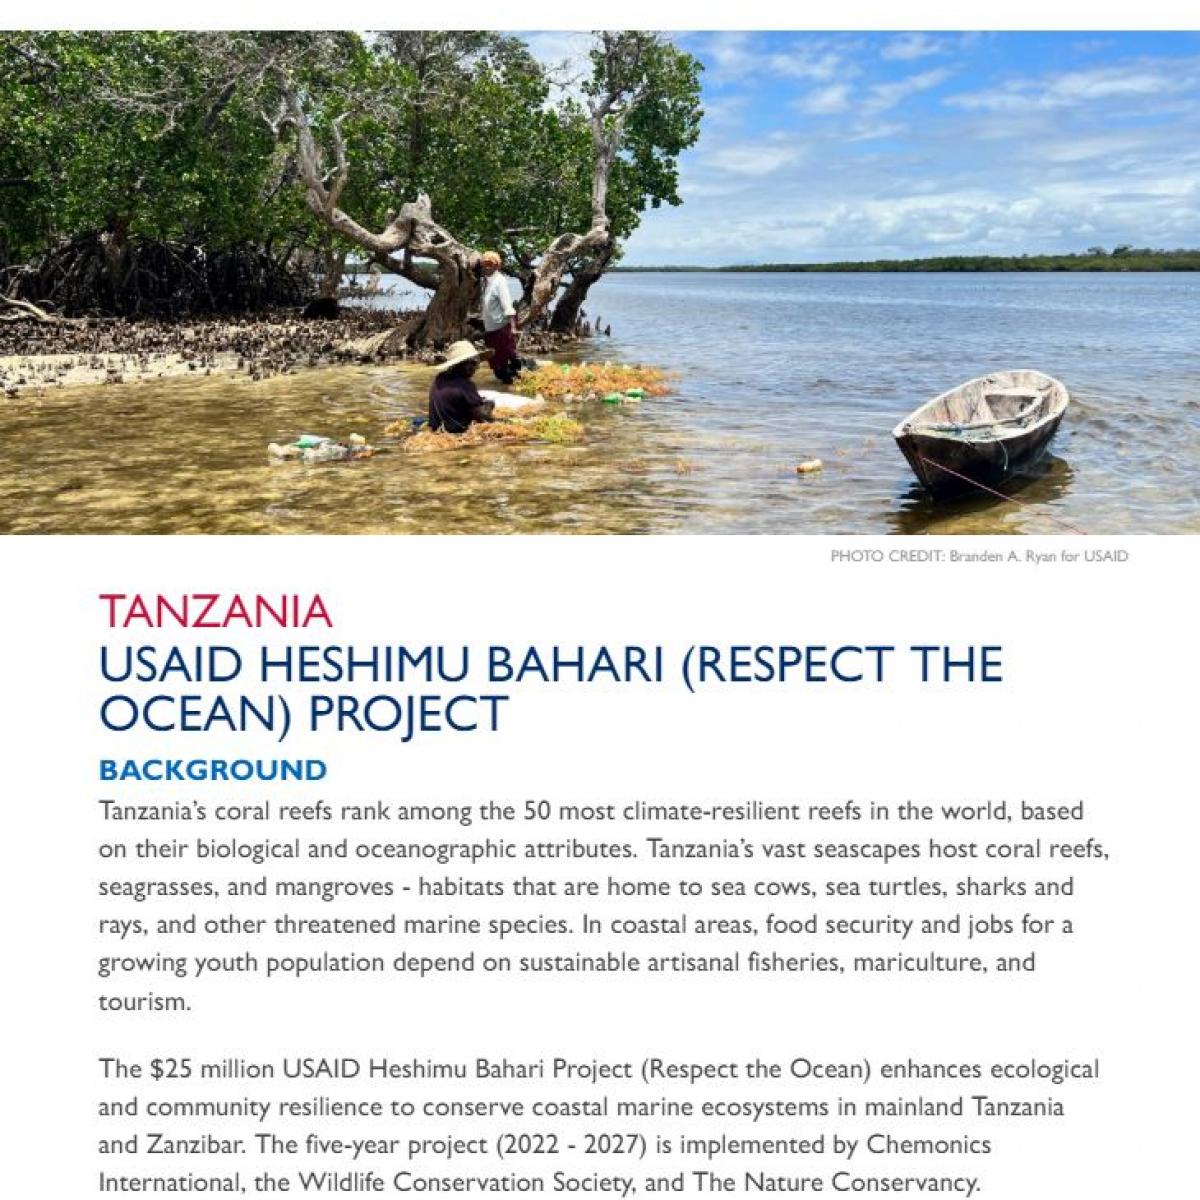 USAID Heshimu Bahari (Respect the Ocean) Project Factsheet